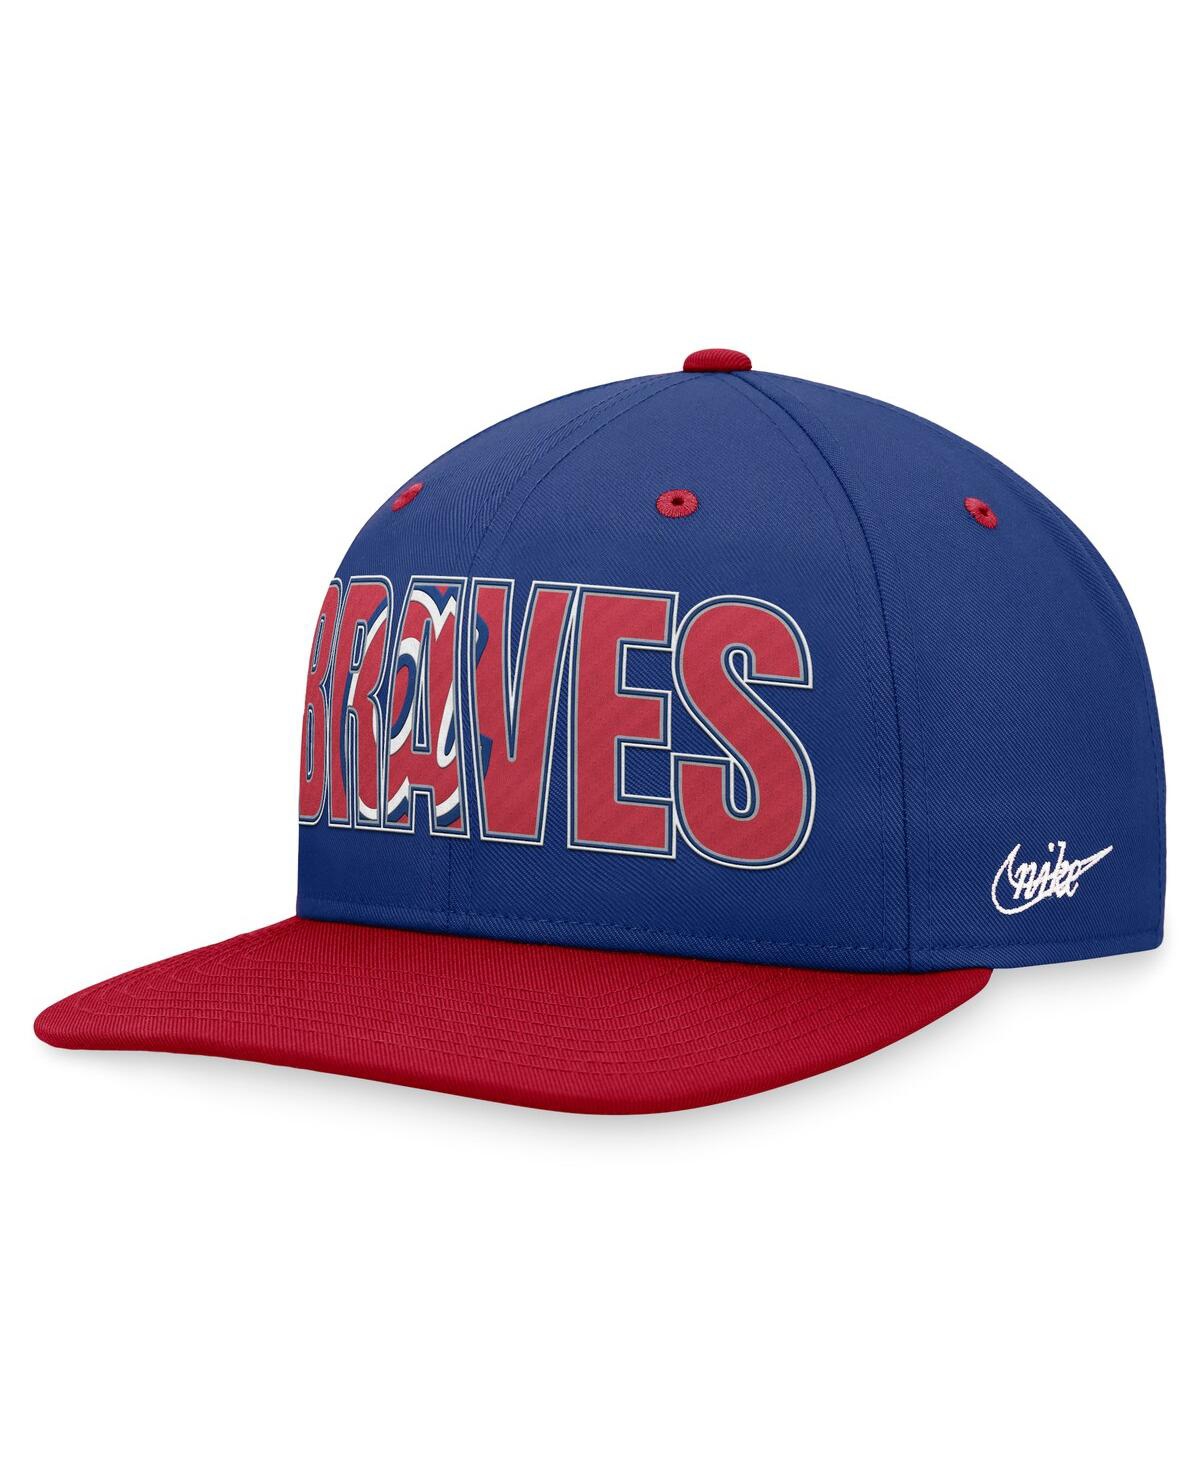 Shop Nike Men's  Royal Atlanta Braves Cooperstown Collection Pro Snapback Hat